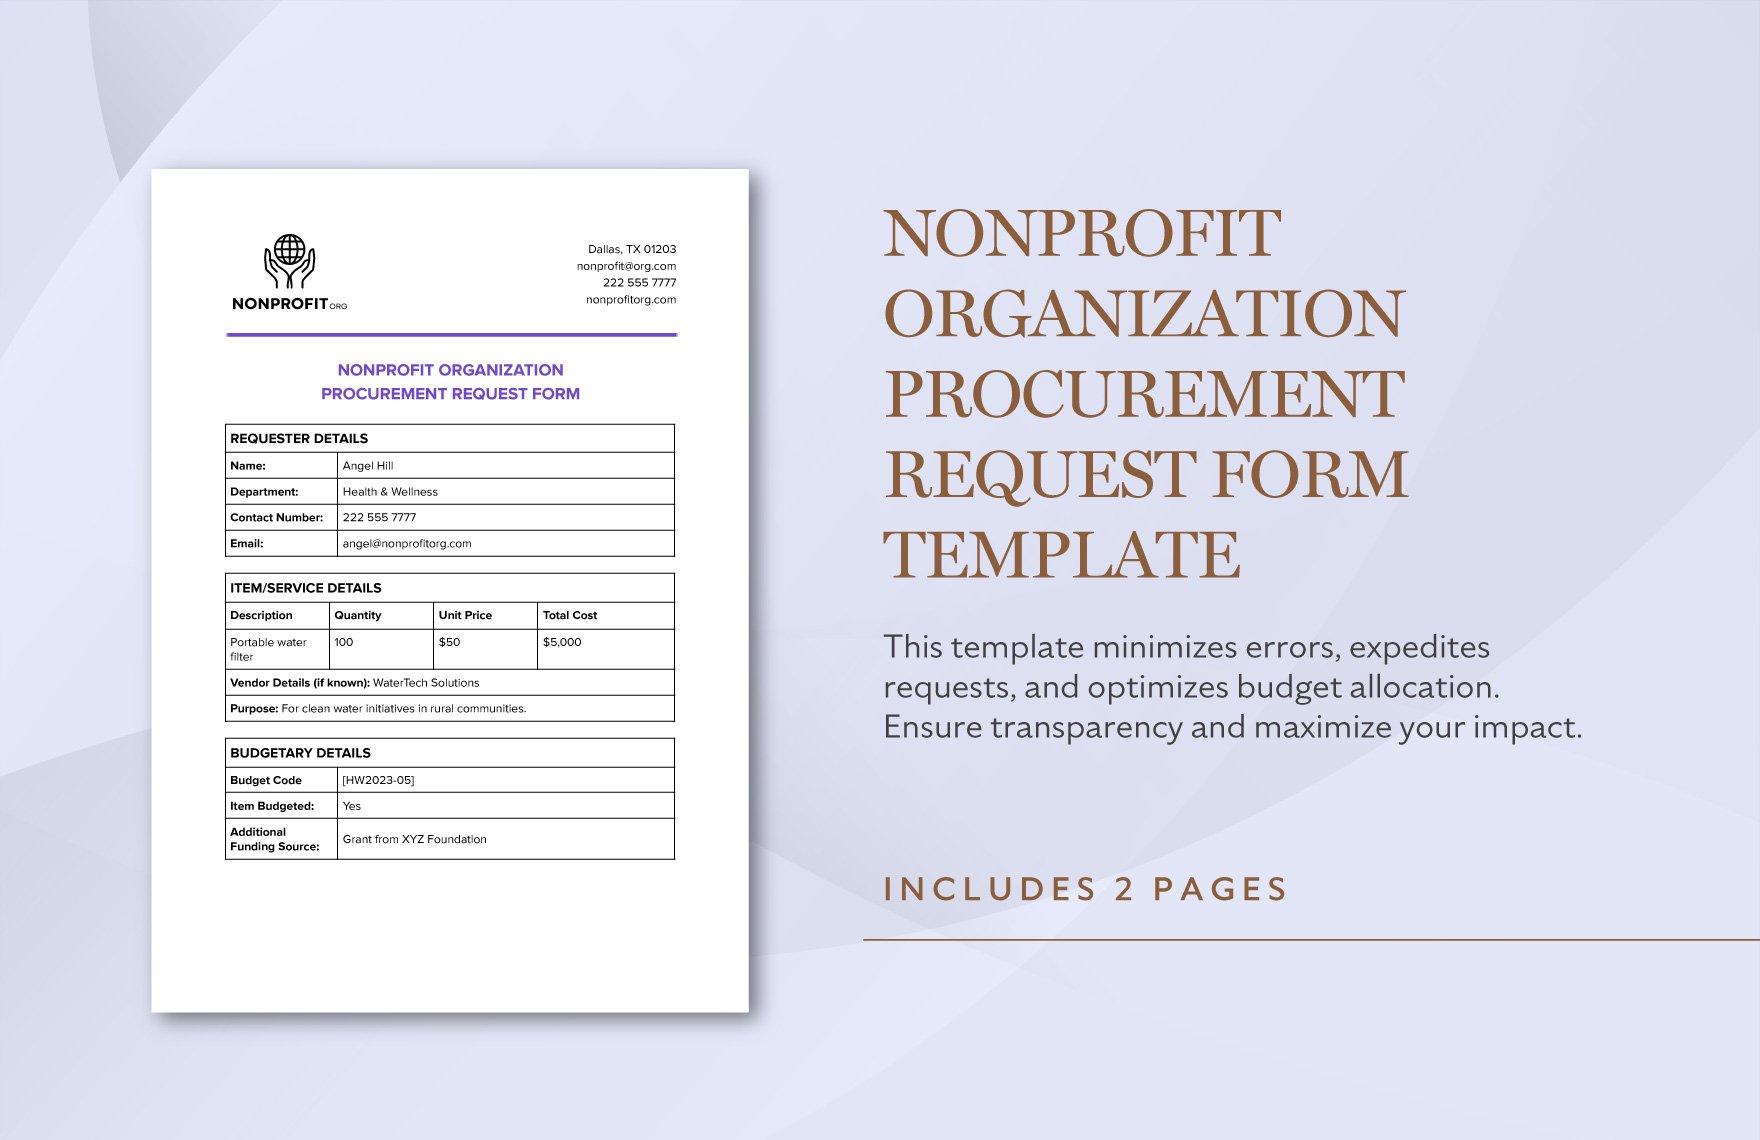 Nonprofit Organization Procurement Request Form Template in Word, PDF